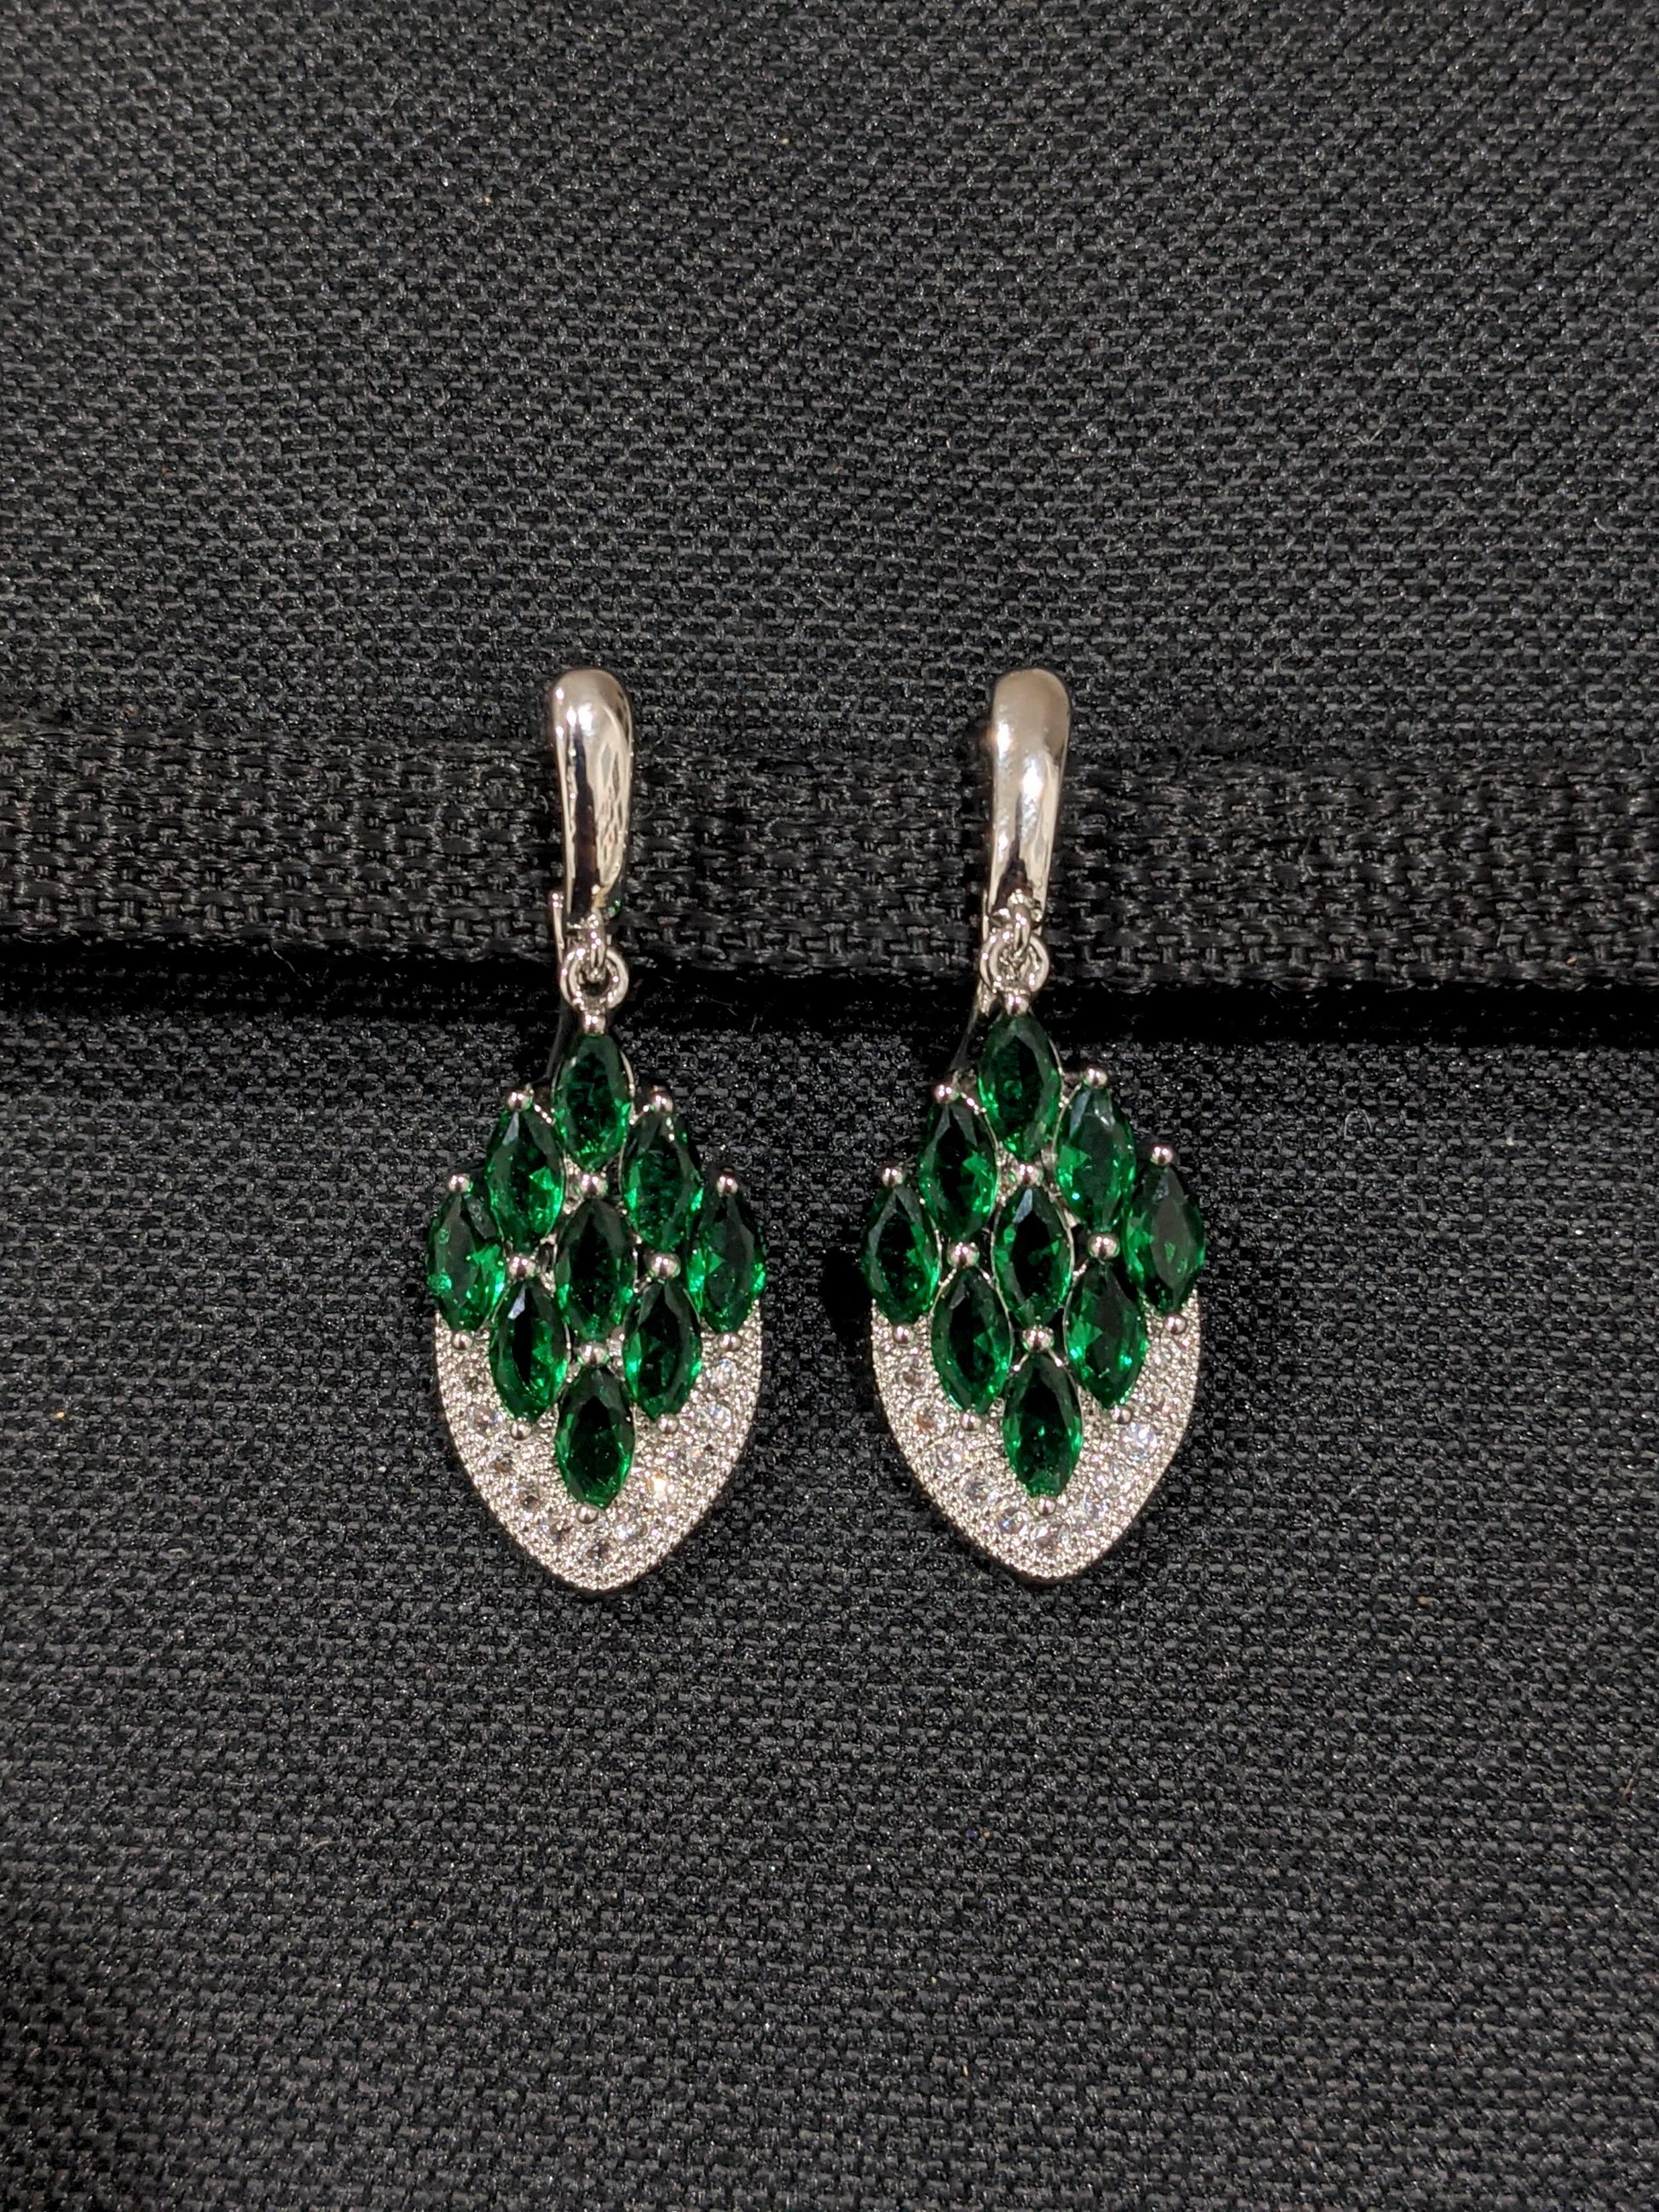 Shiny CZ stone embedded platinum finish curved diamond design earrings - Simpliful